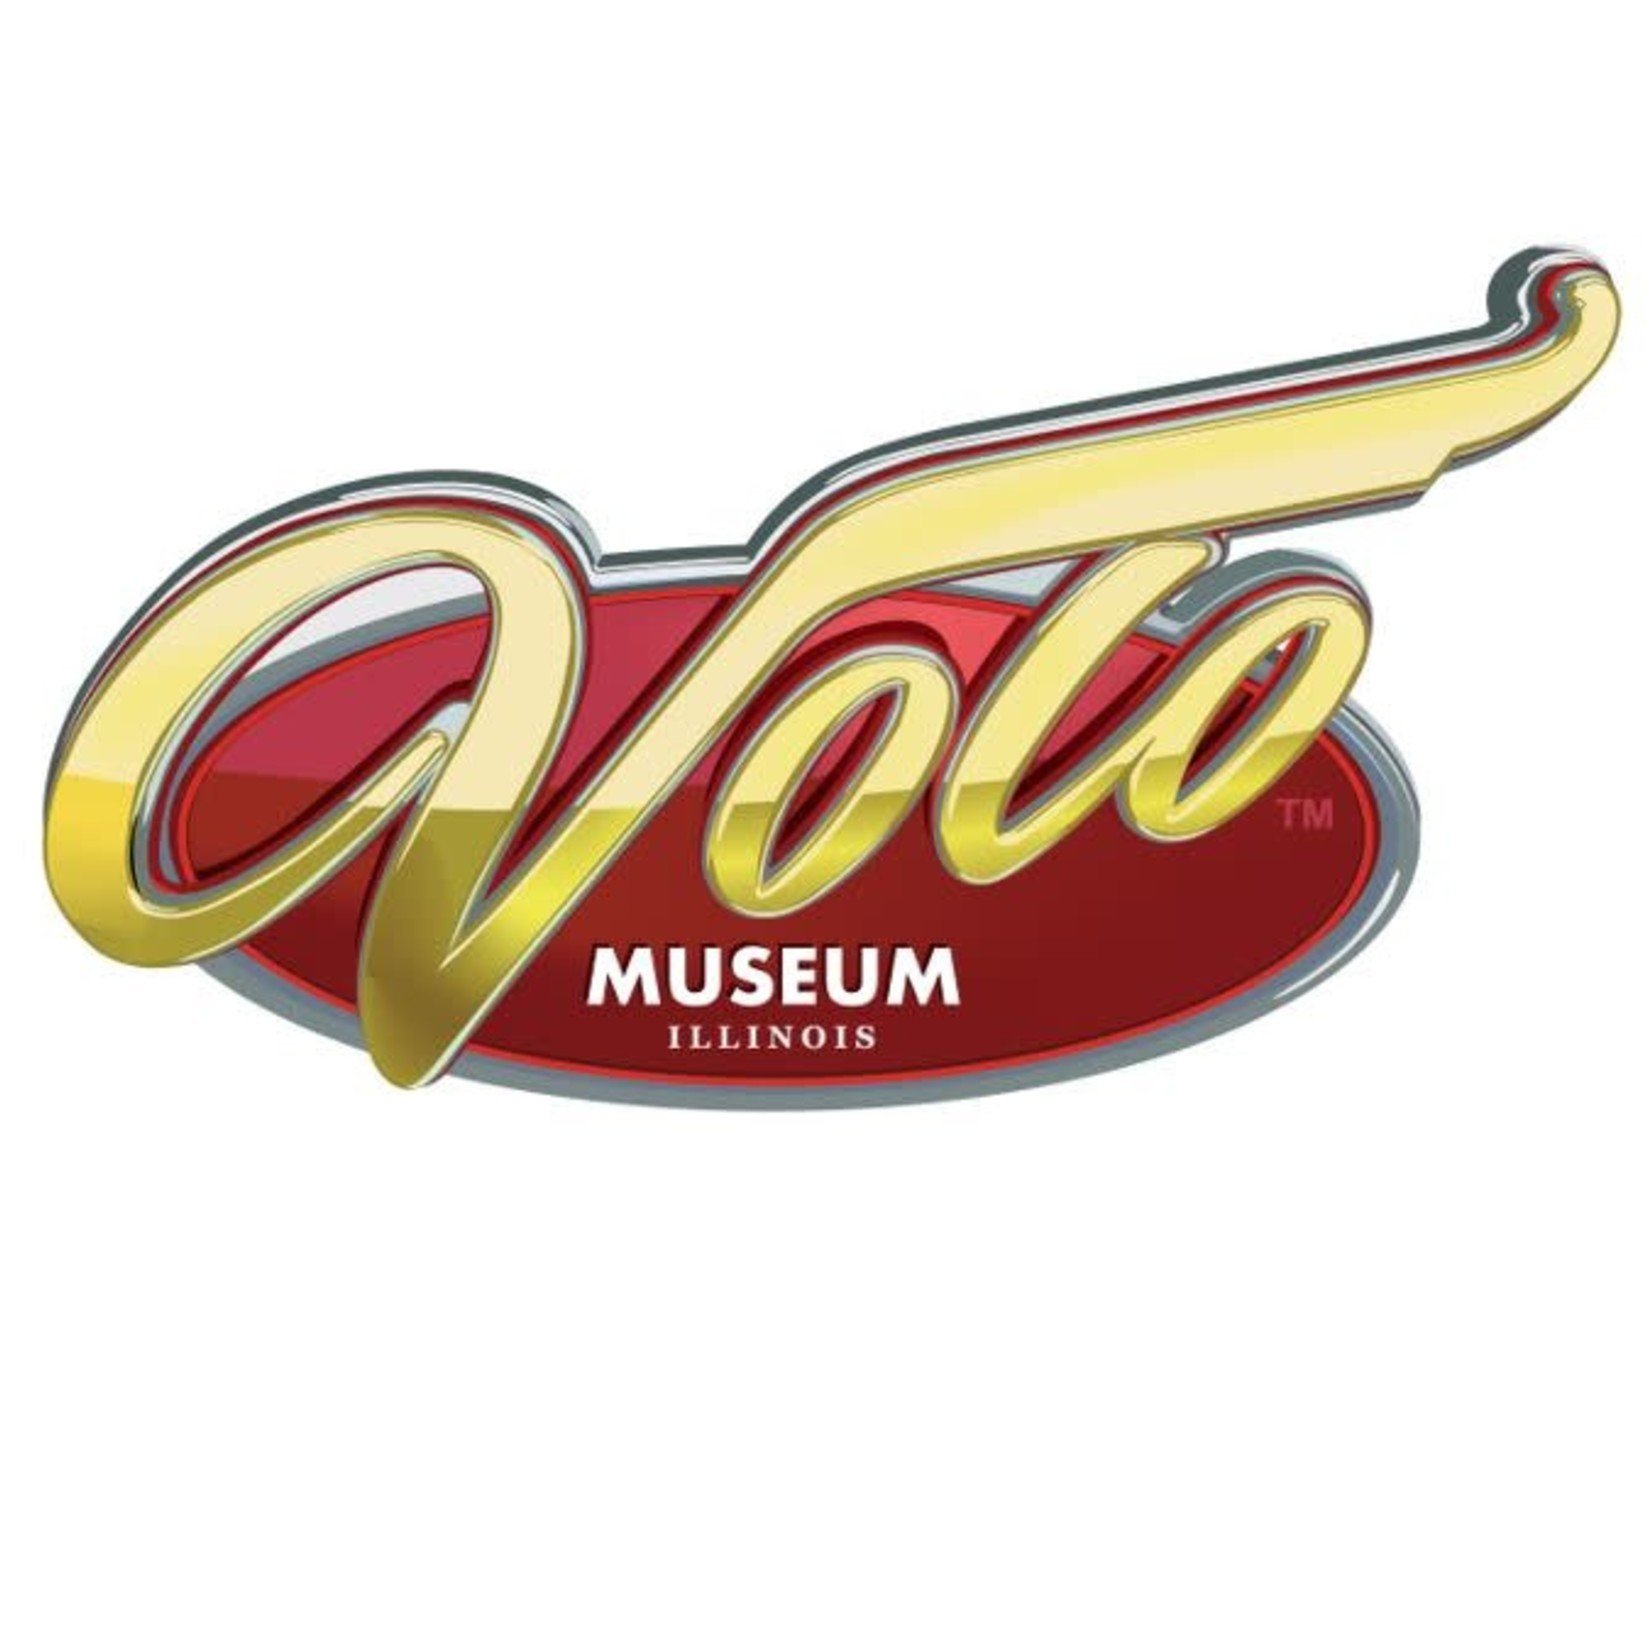 Volo Auto Museum-Volo Volo Auto Museum-Volo $22.95 Admission to Volo Antique Auto Museum